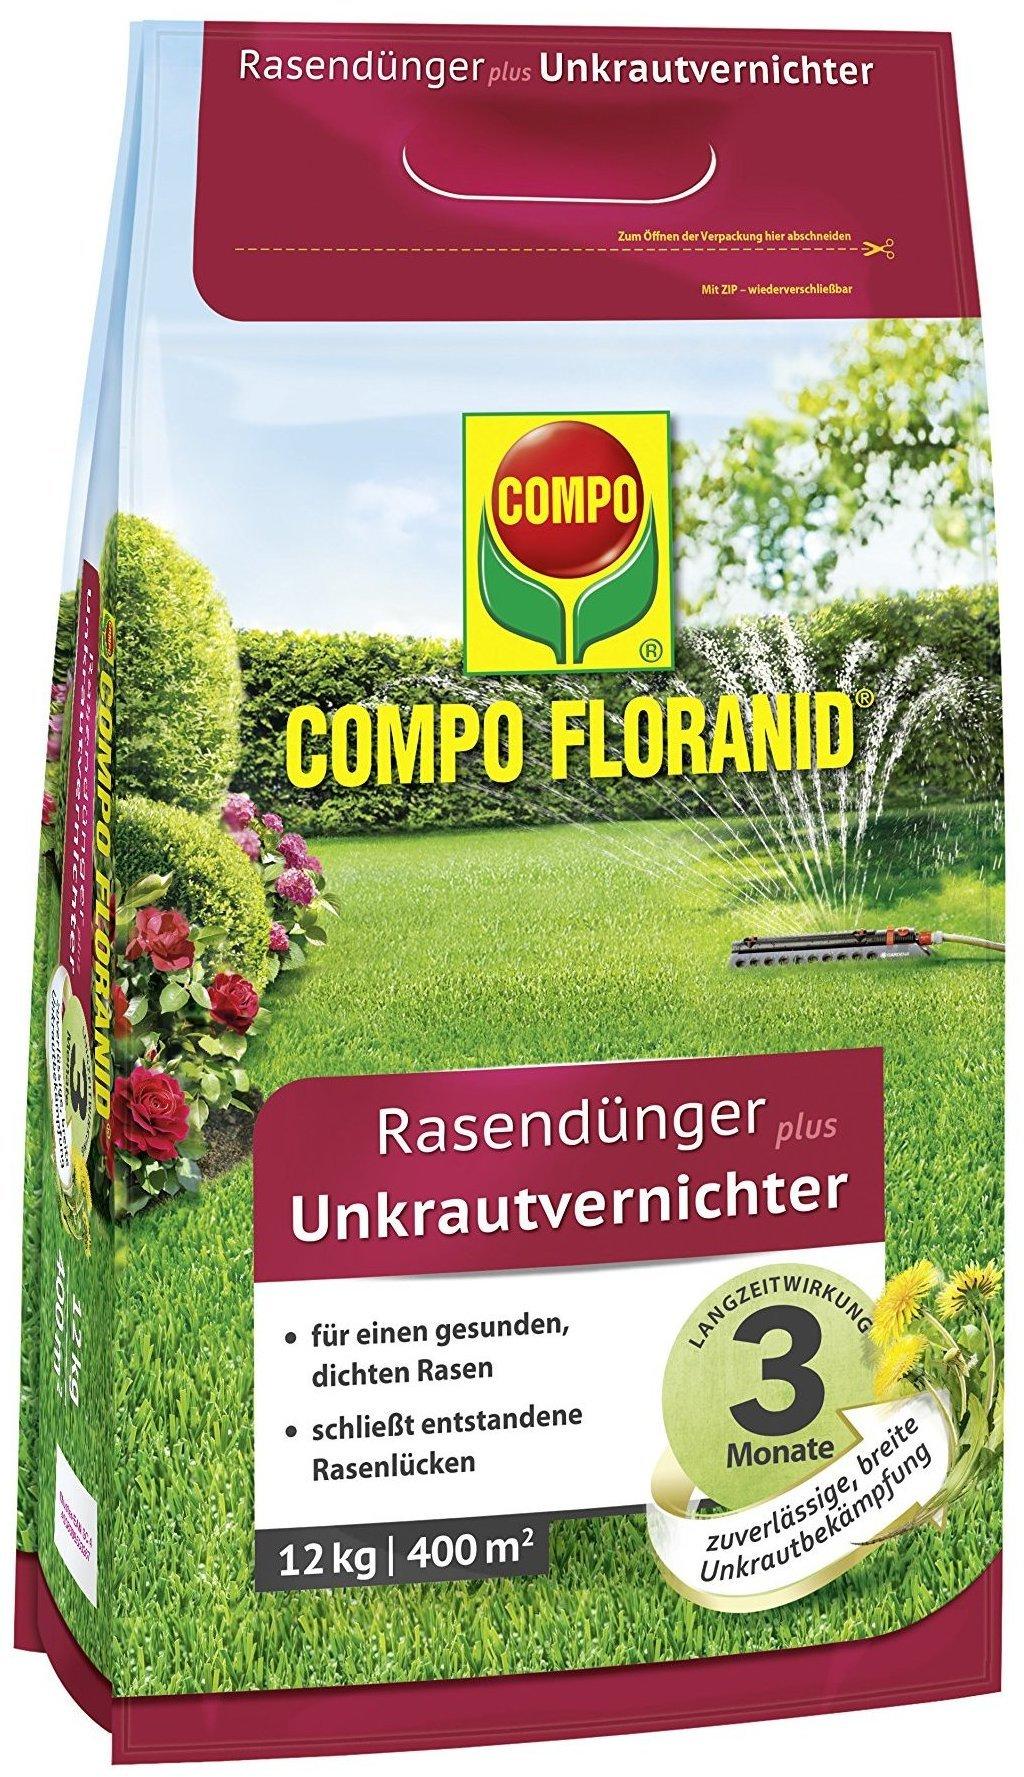 COMPO Floranid Rasendünger plus Unkrautvernichter 12kg Test ❤️ Jetzt ab  55,90 € (Mai 2022) Testbericht.de